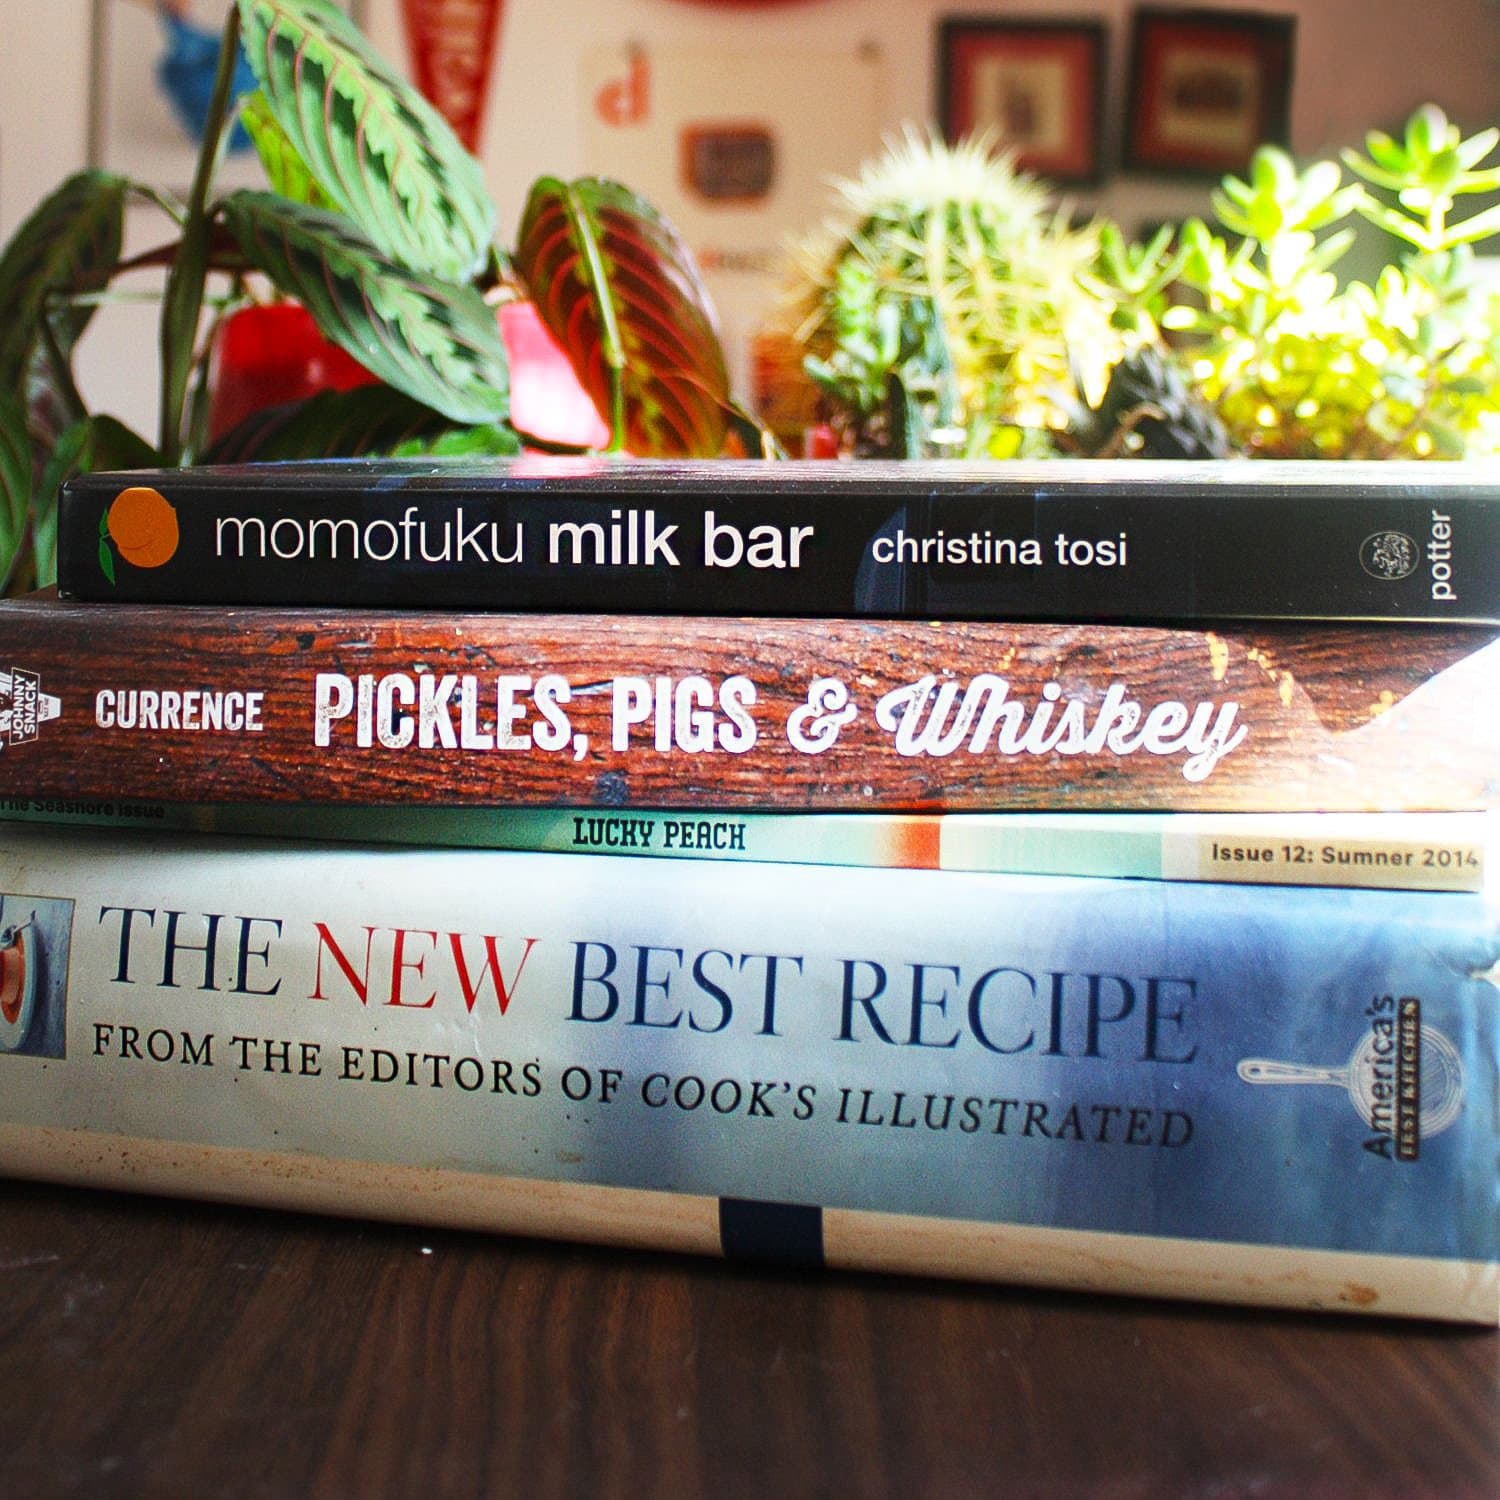 5 Cookbooks I Read Cover To Cover Like Romance Novels Kitchn - 